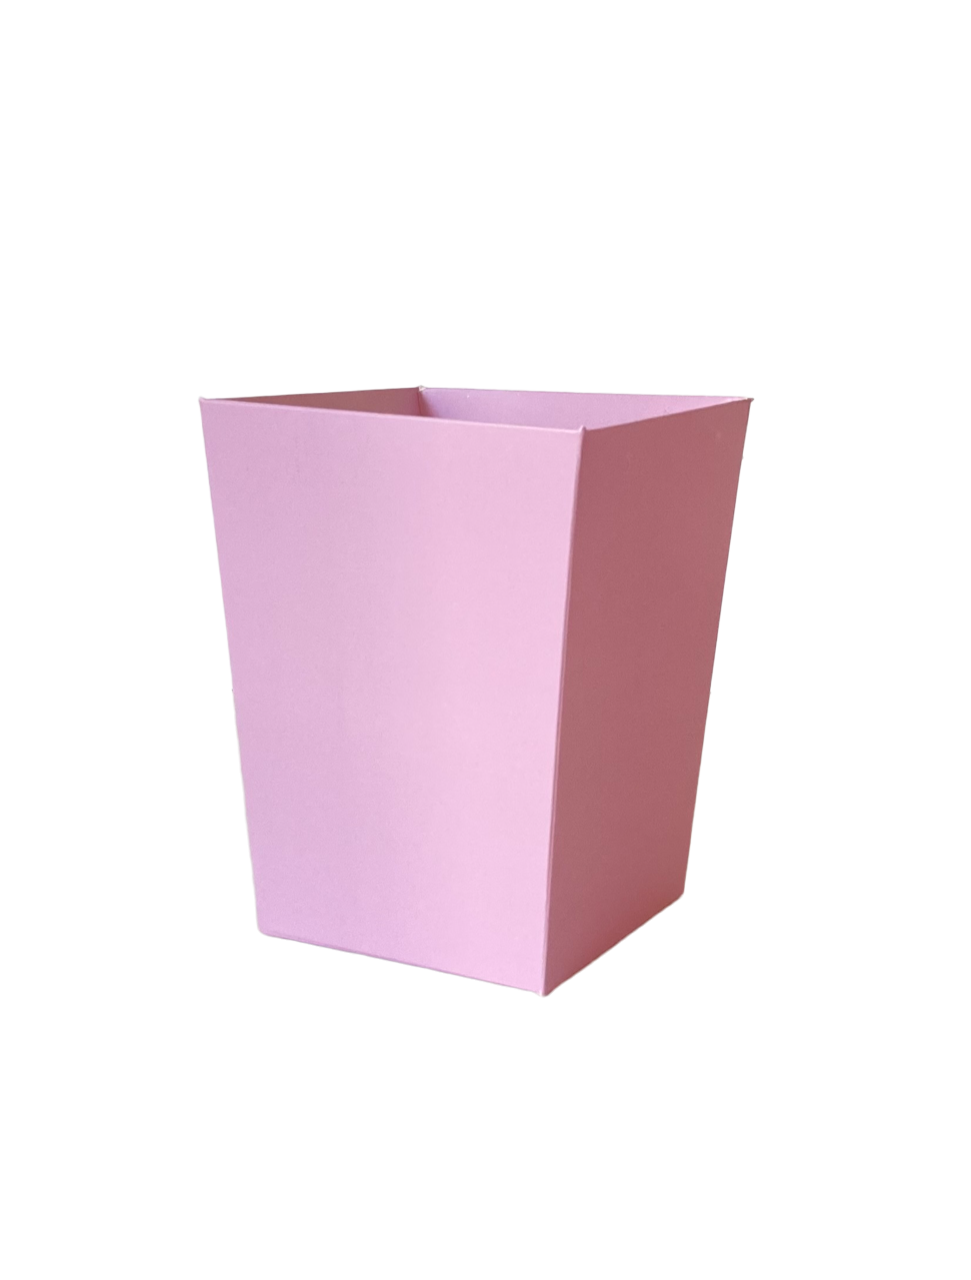 Коробка плотность 300гр/м Трапеция 15*12*9см/10шт. б/ручки Лавандово-розовая